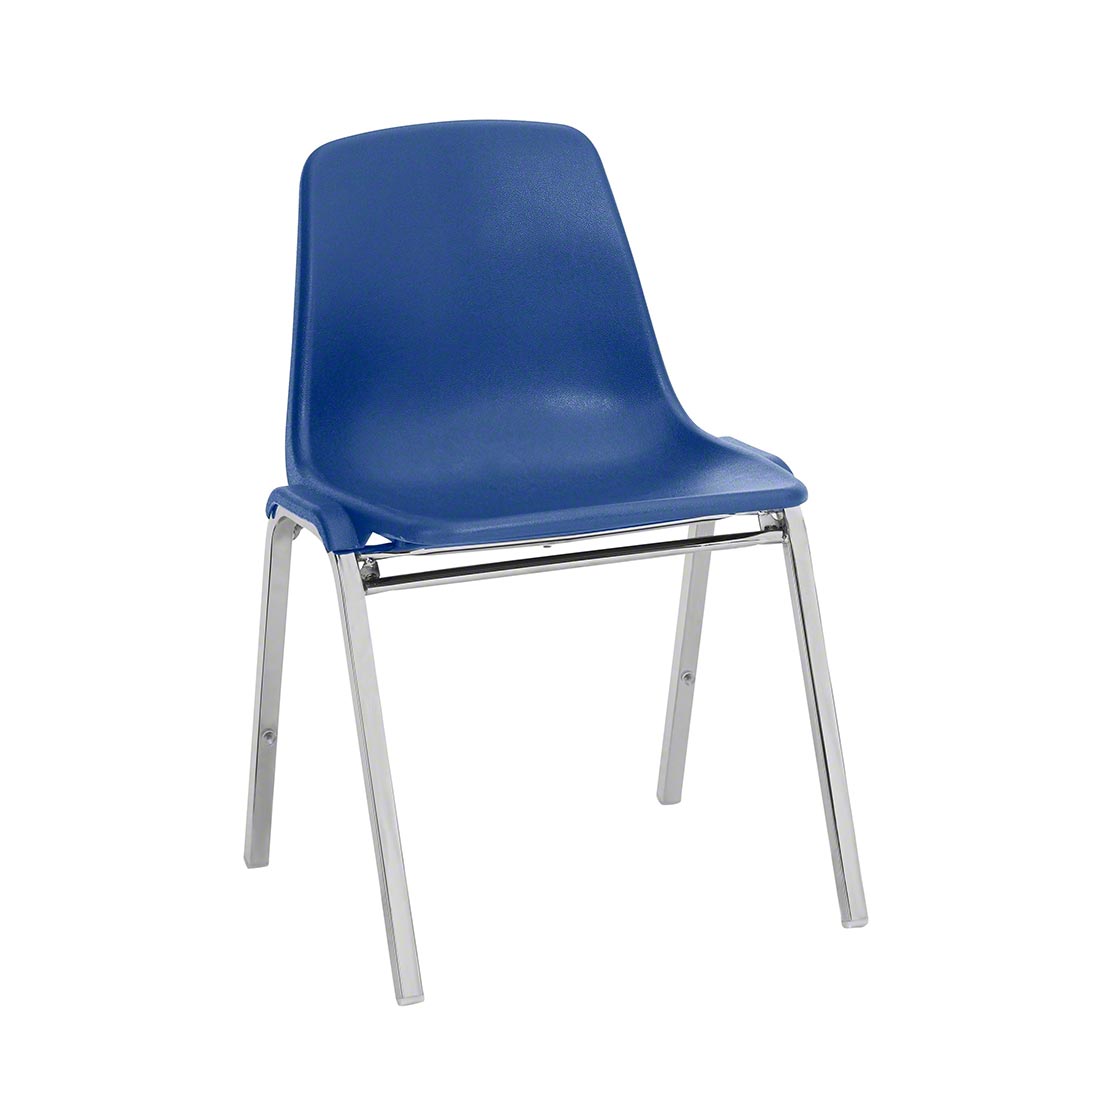 NPS 8125-CN Polyshell Stack Chair Carton of 4 300-lb Weight Capacity 9-1/4 Length x 19-1/4 Width x 31 Height Navy Blue 